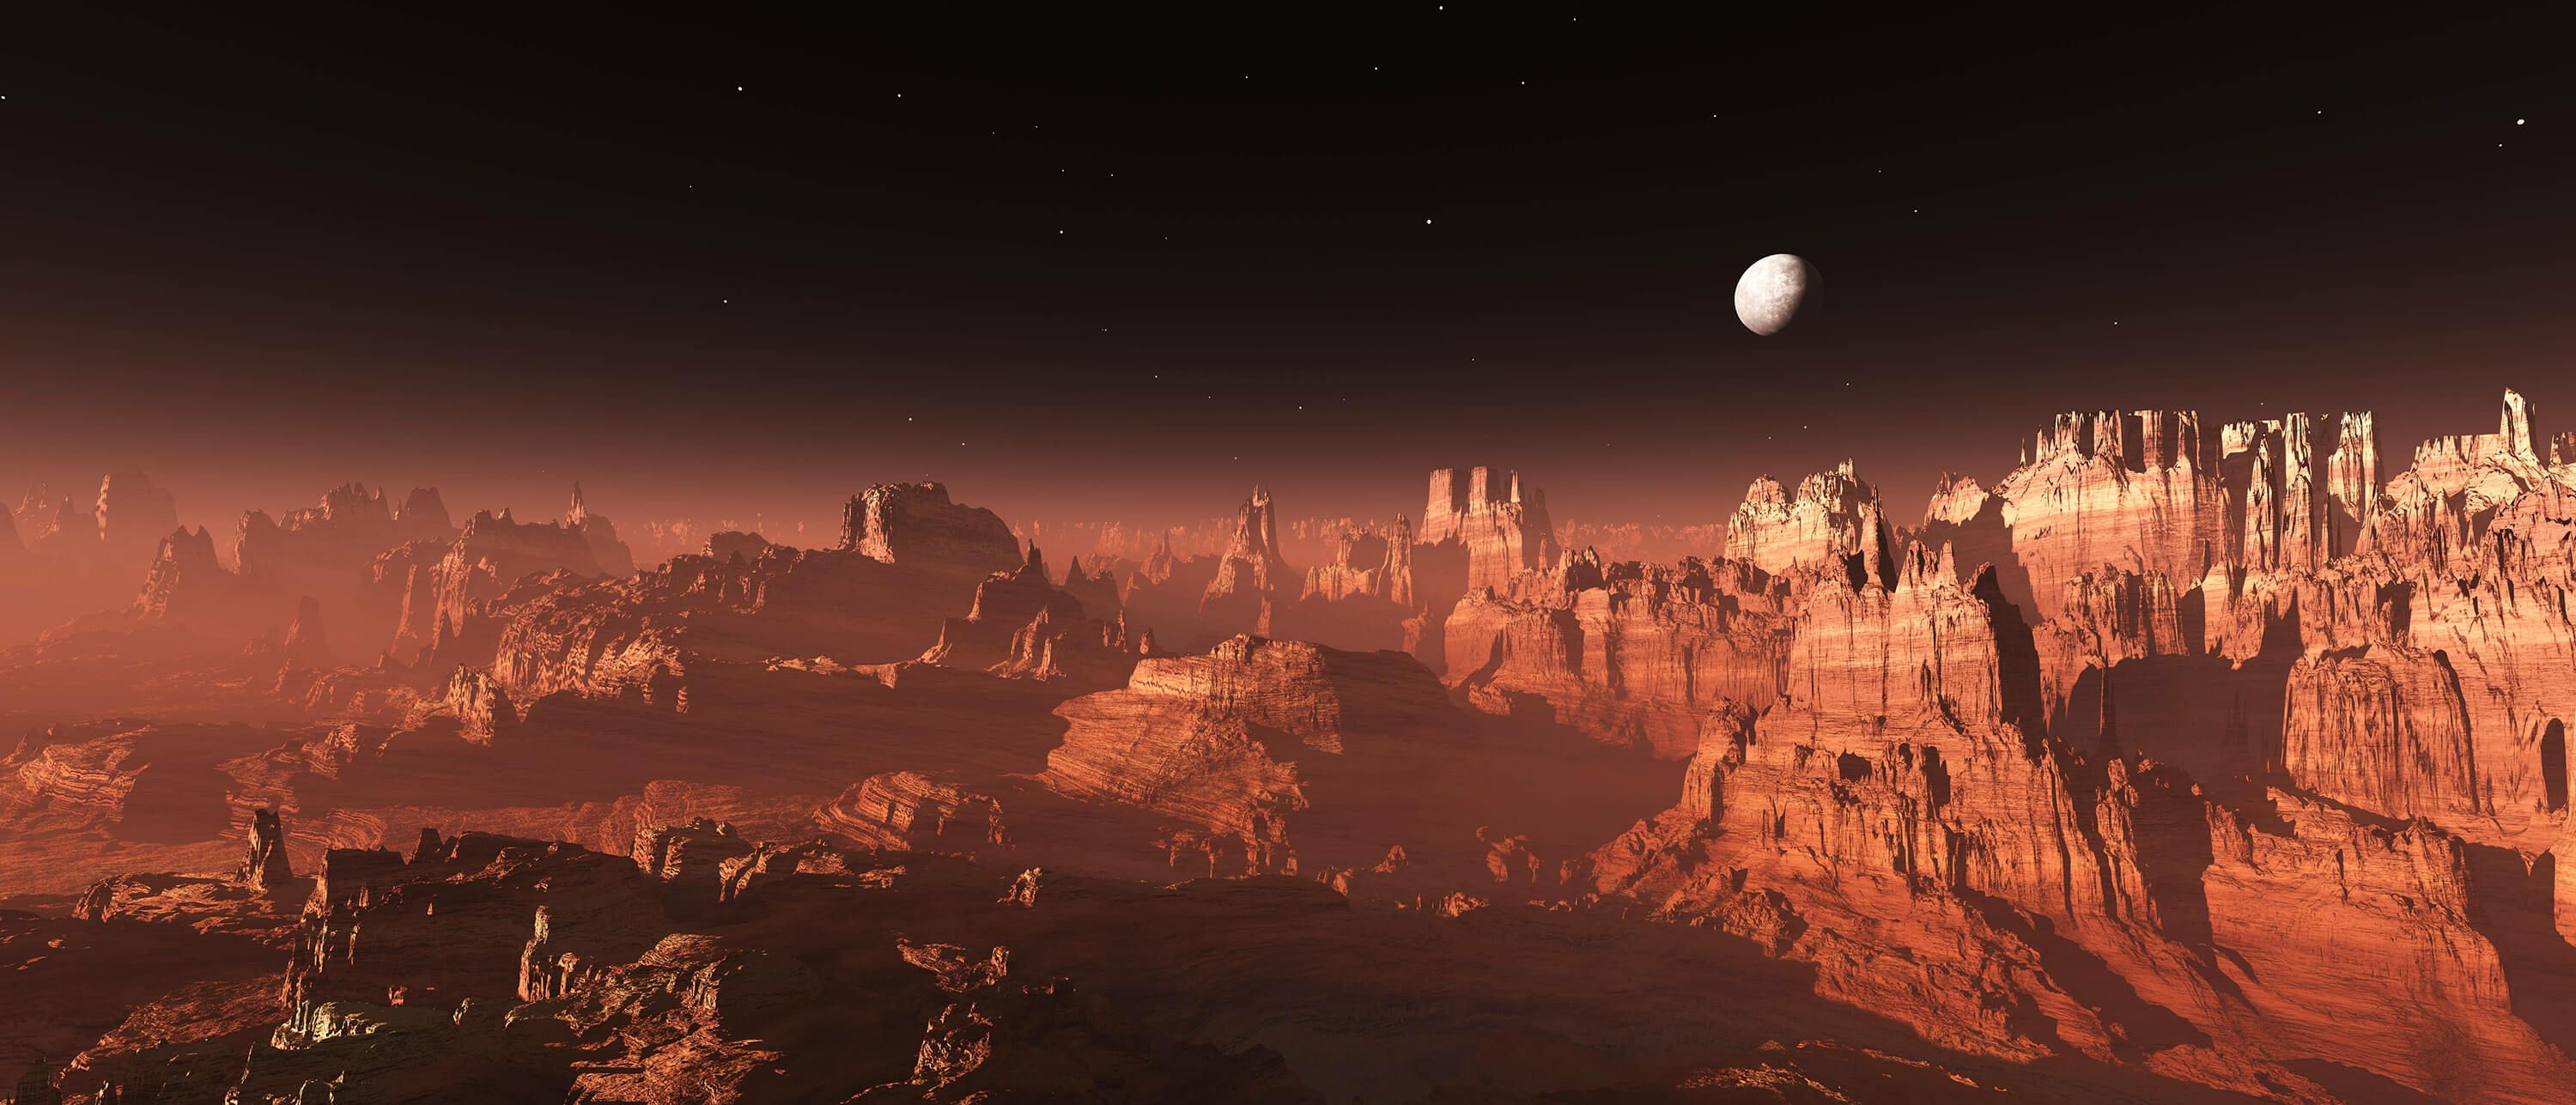 wallpaper Zonsondergang op Mars